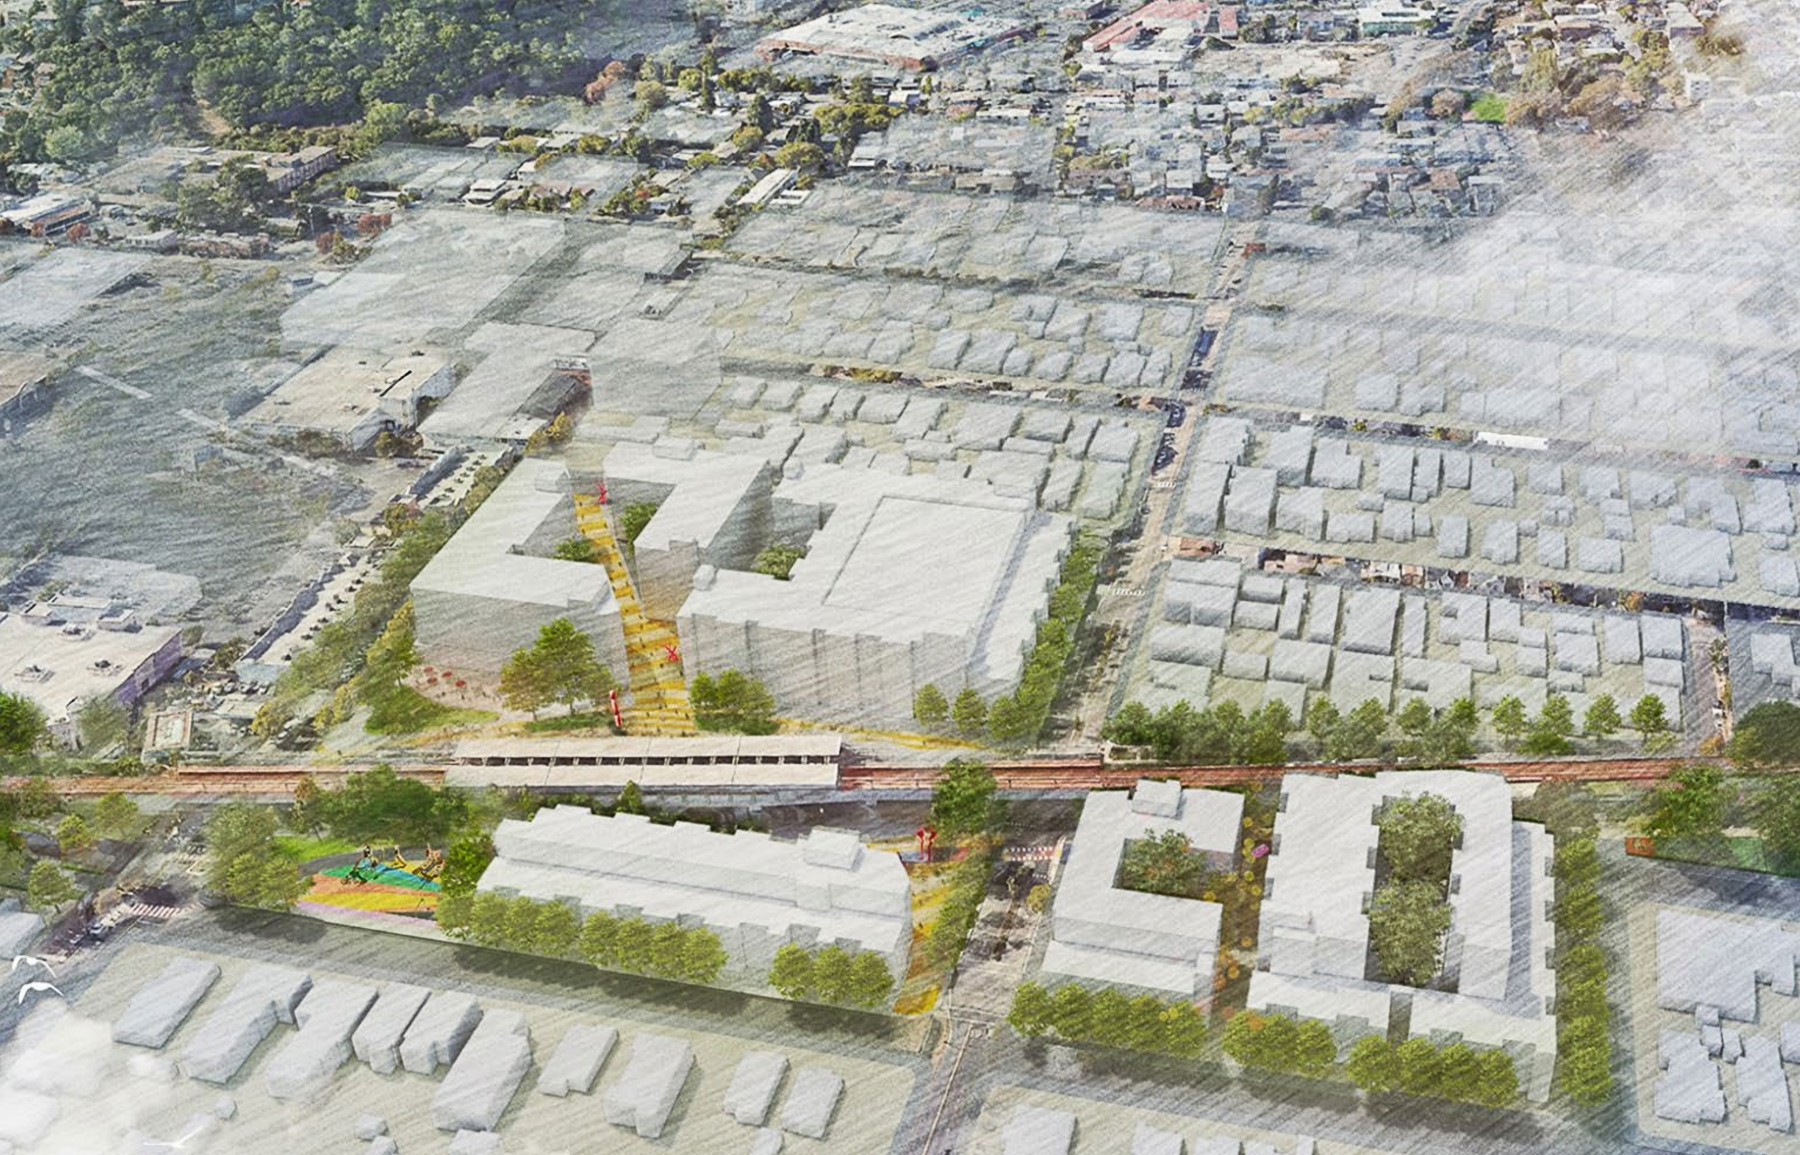 El Cerrito Plaza BART Station development close view, illustration via project plans